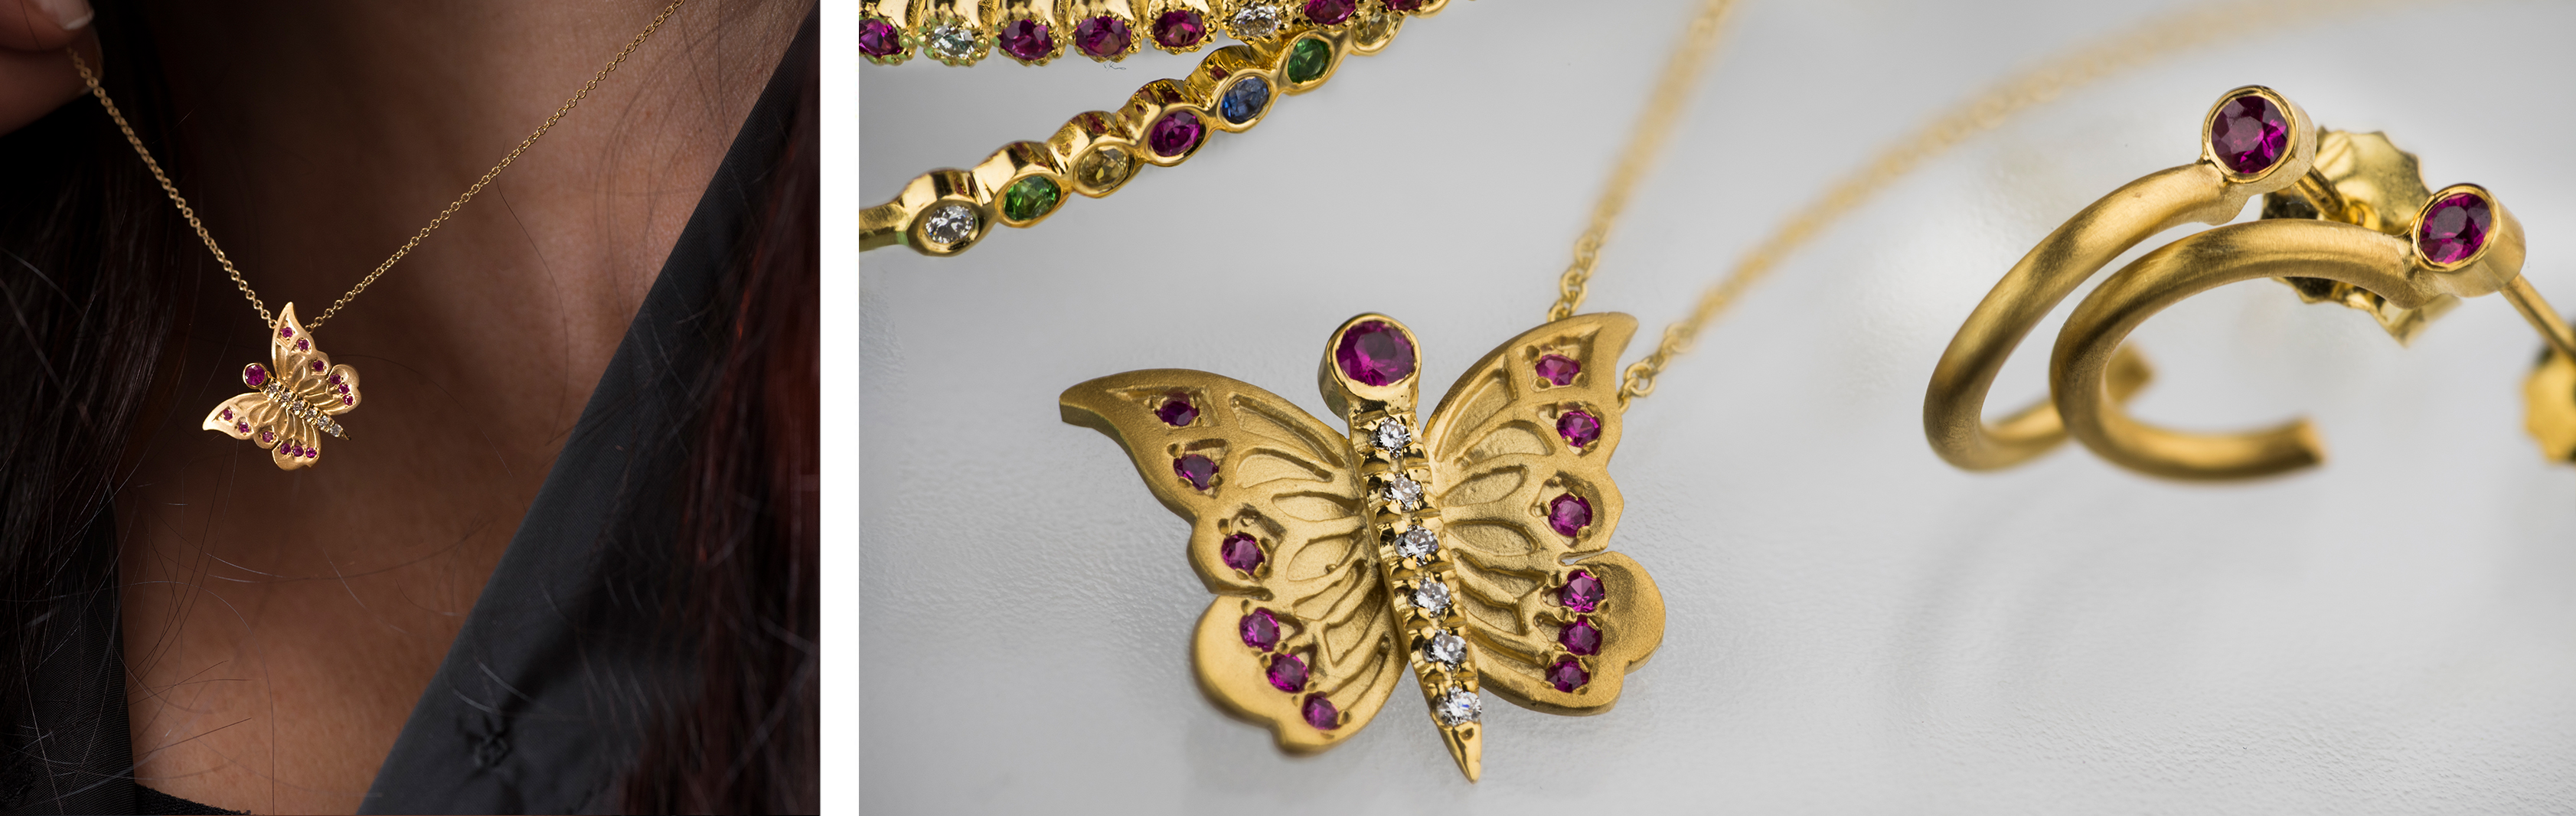 Butterfly necklace, stud earrings, Bangle gold bracelet, bracelet for women, jewelry, GRAS jewelry, sapphire, diamond, colored tennis bracelet, gras designs in gold and gems